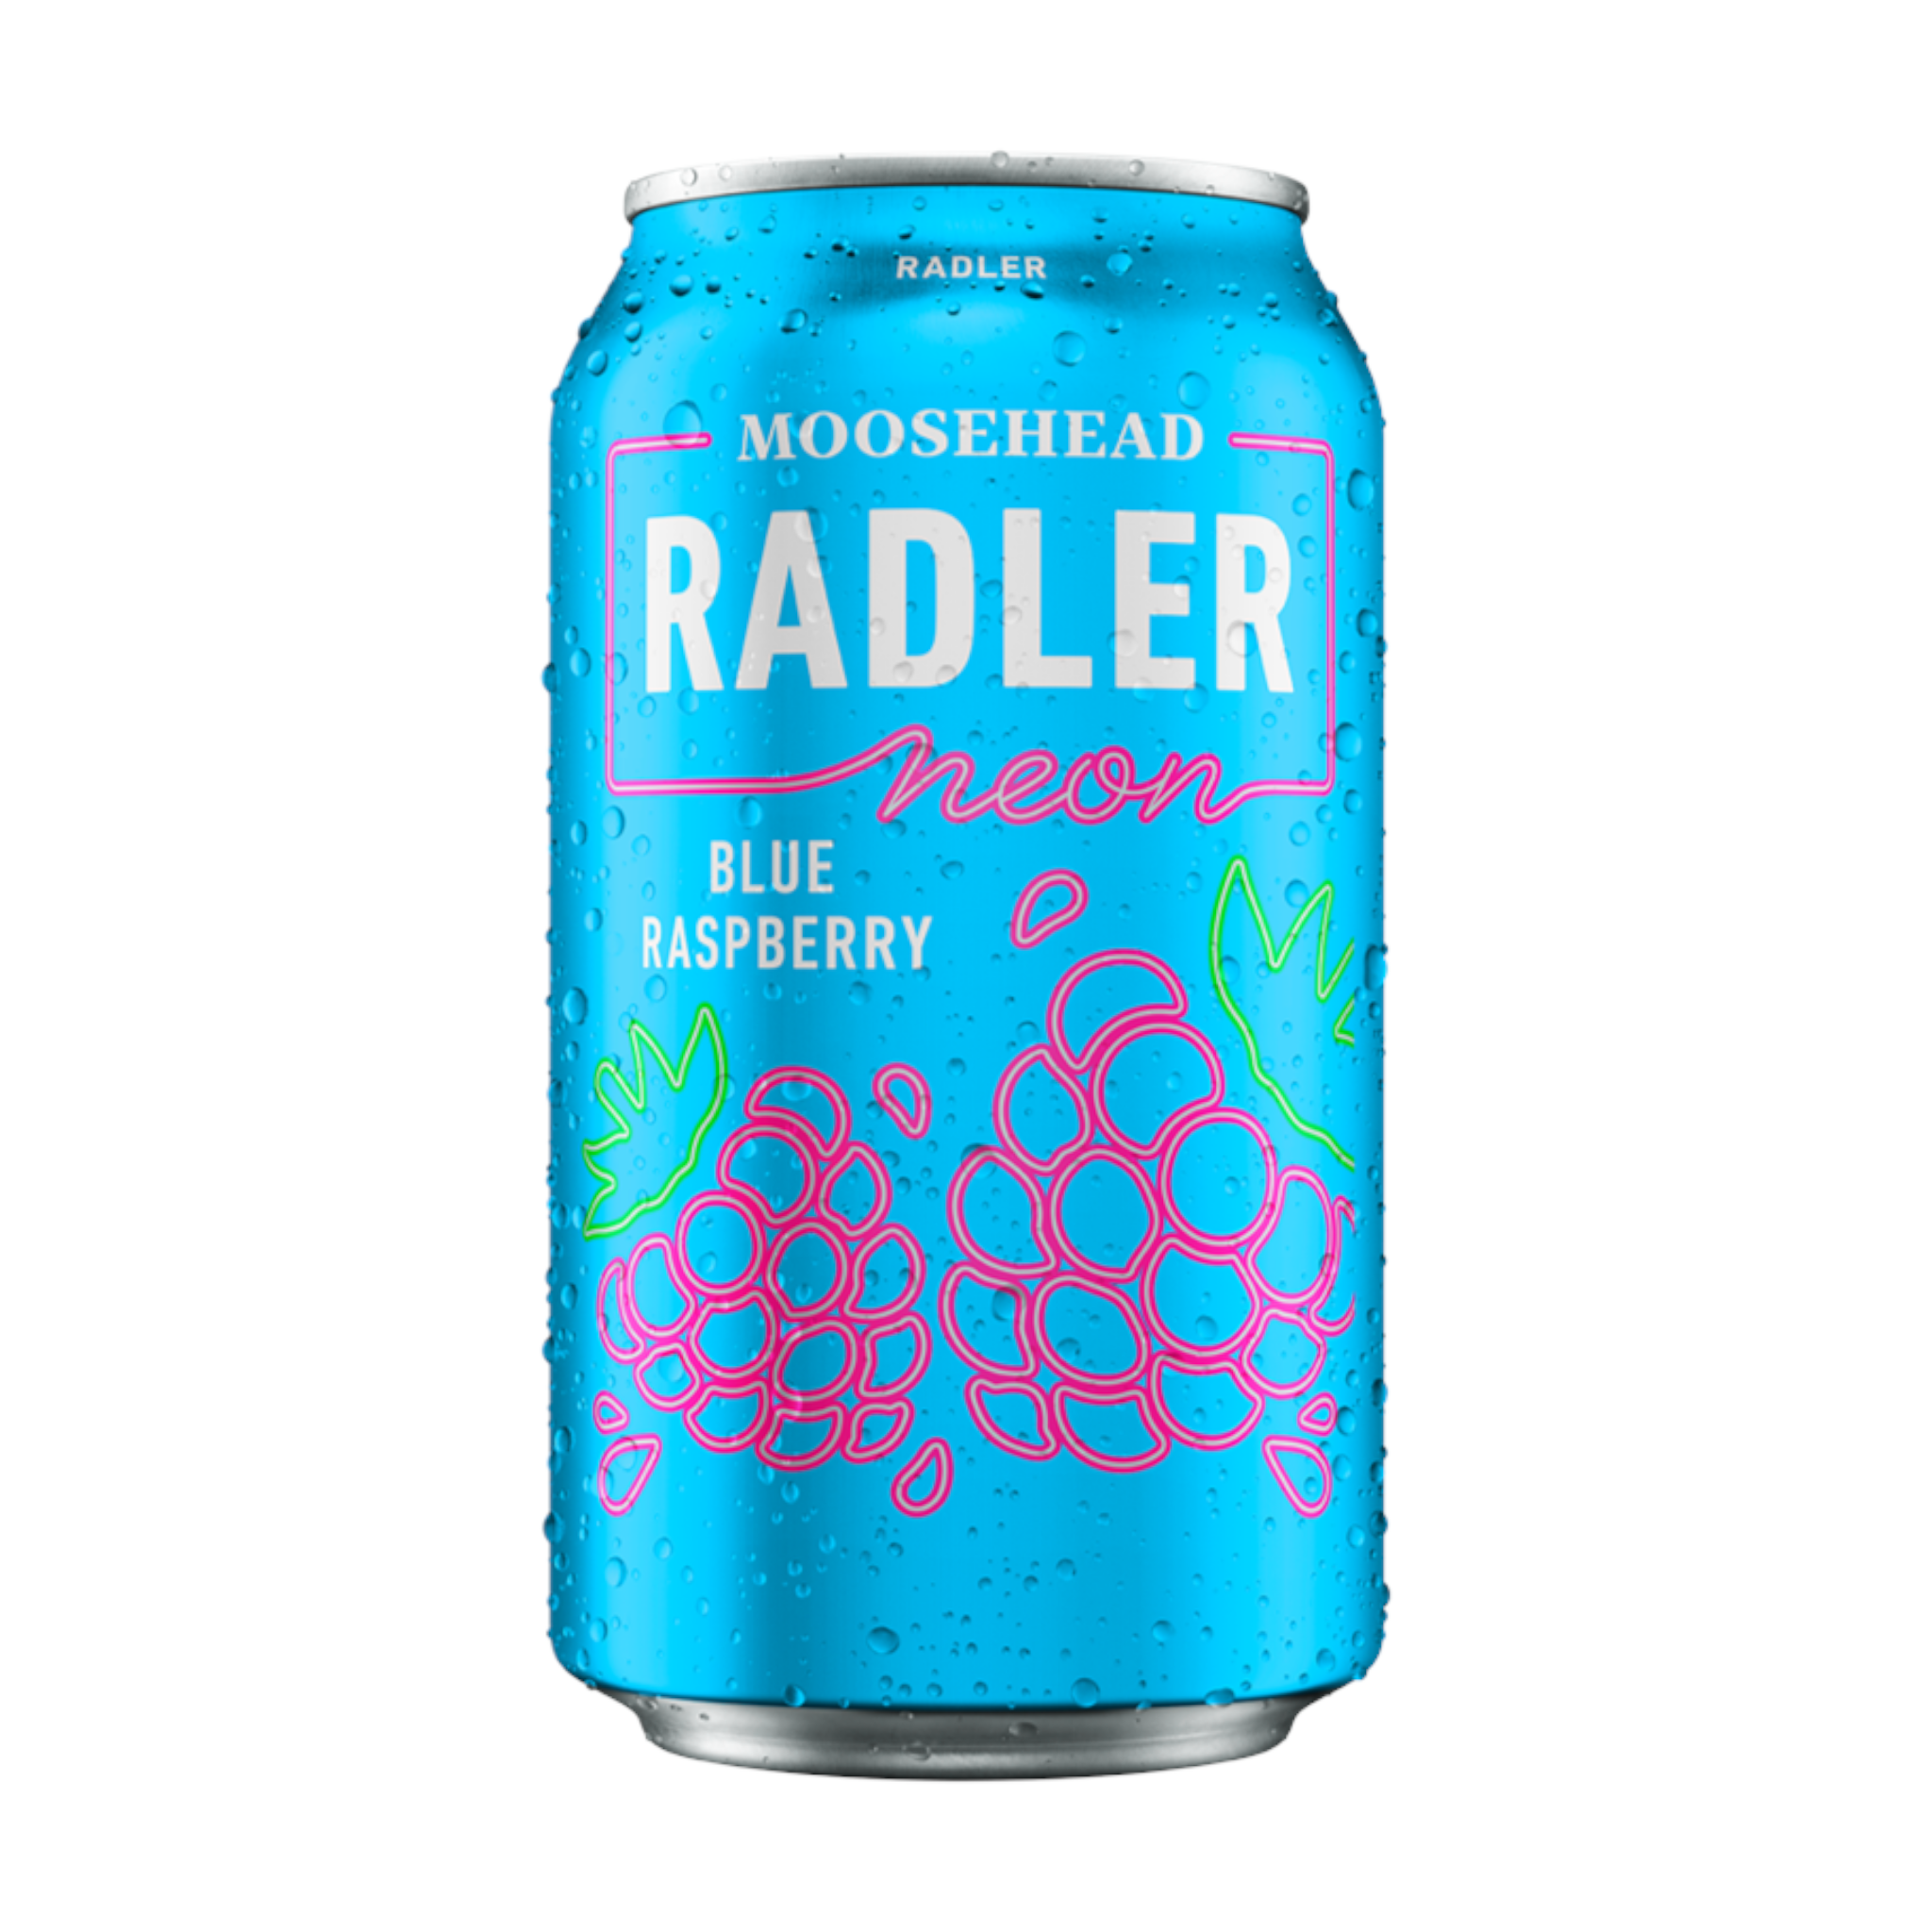 Moosehead Radler Neon Blue Raspberry 355ml - Bier aus Kanada mit 4% Vol.